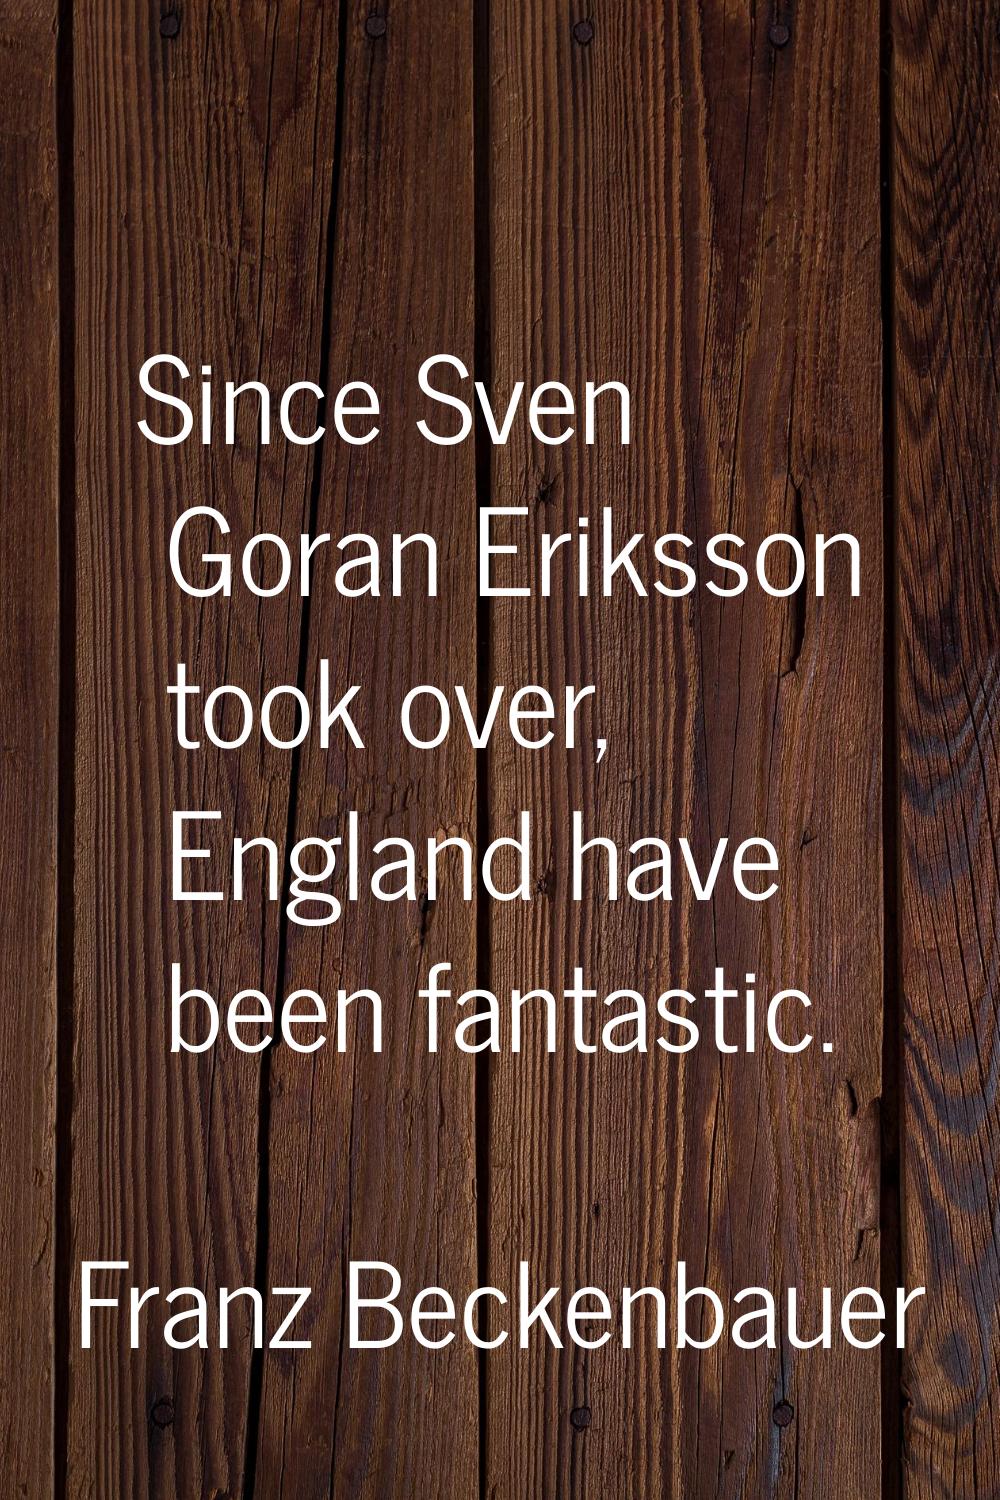 Since Sven Goran Eriksson took over, England have been fantastic.